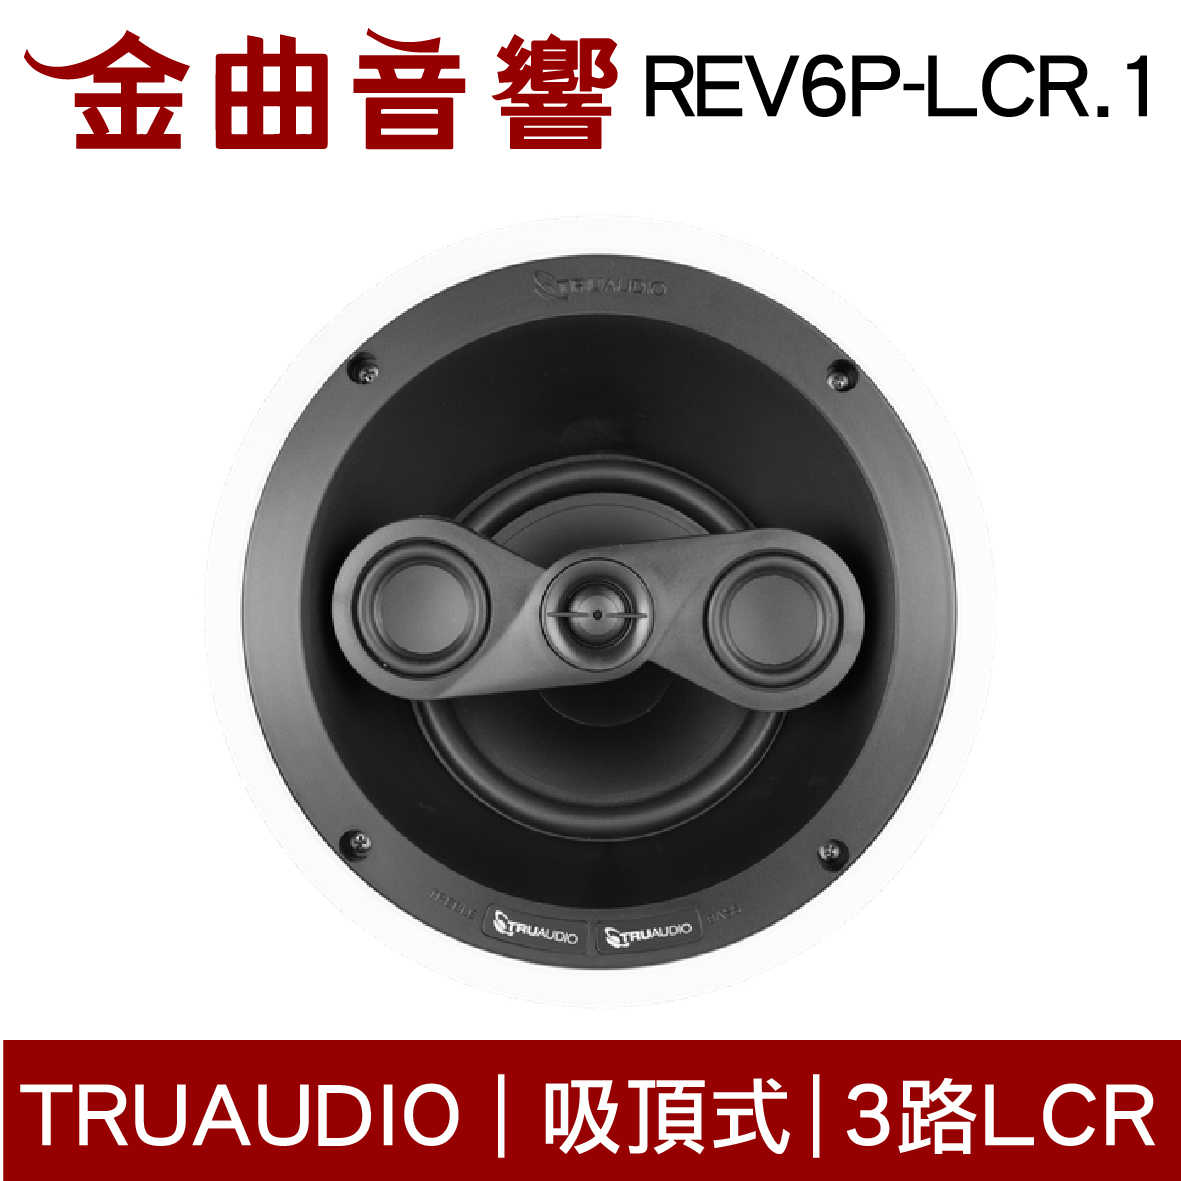 Truaudio REV6P-LCR.1 (單隻) 吸頂式 家庭影院 揚聲器 | 金曲音響